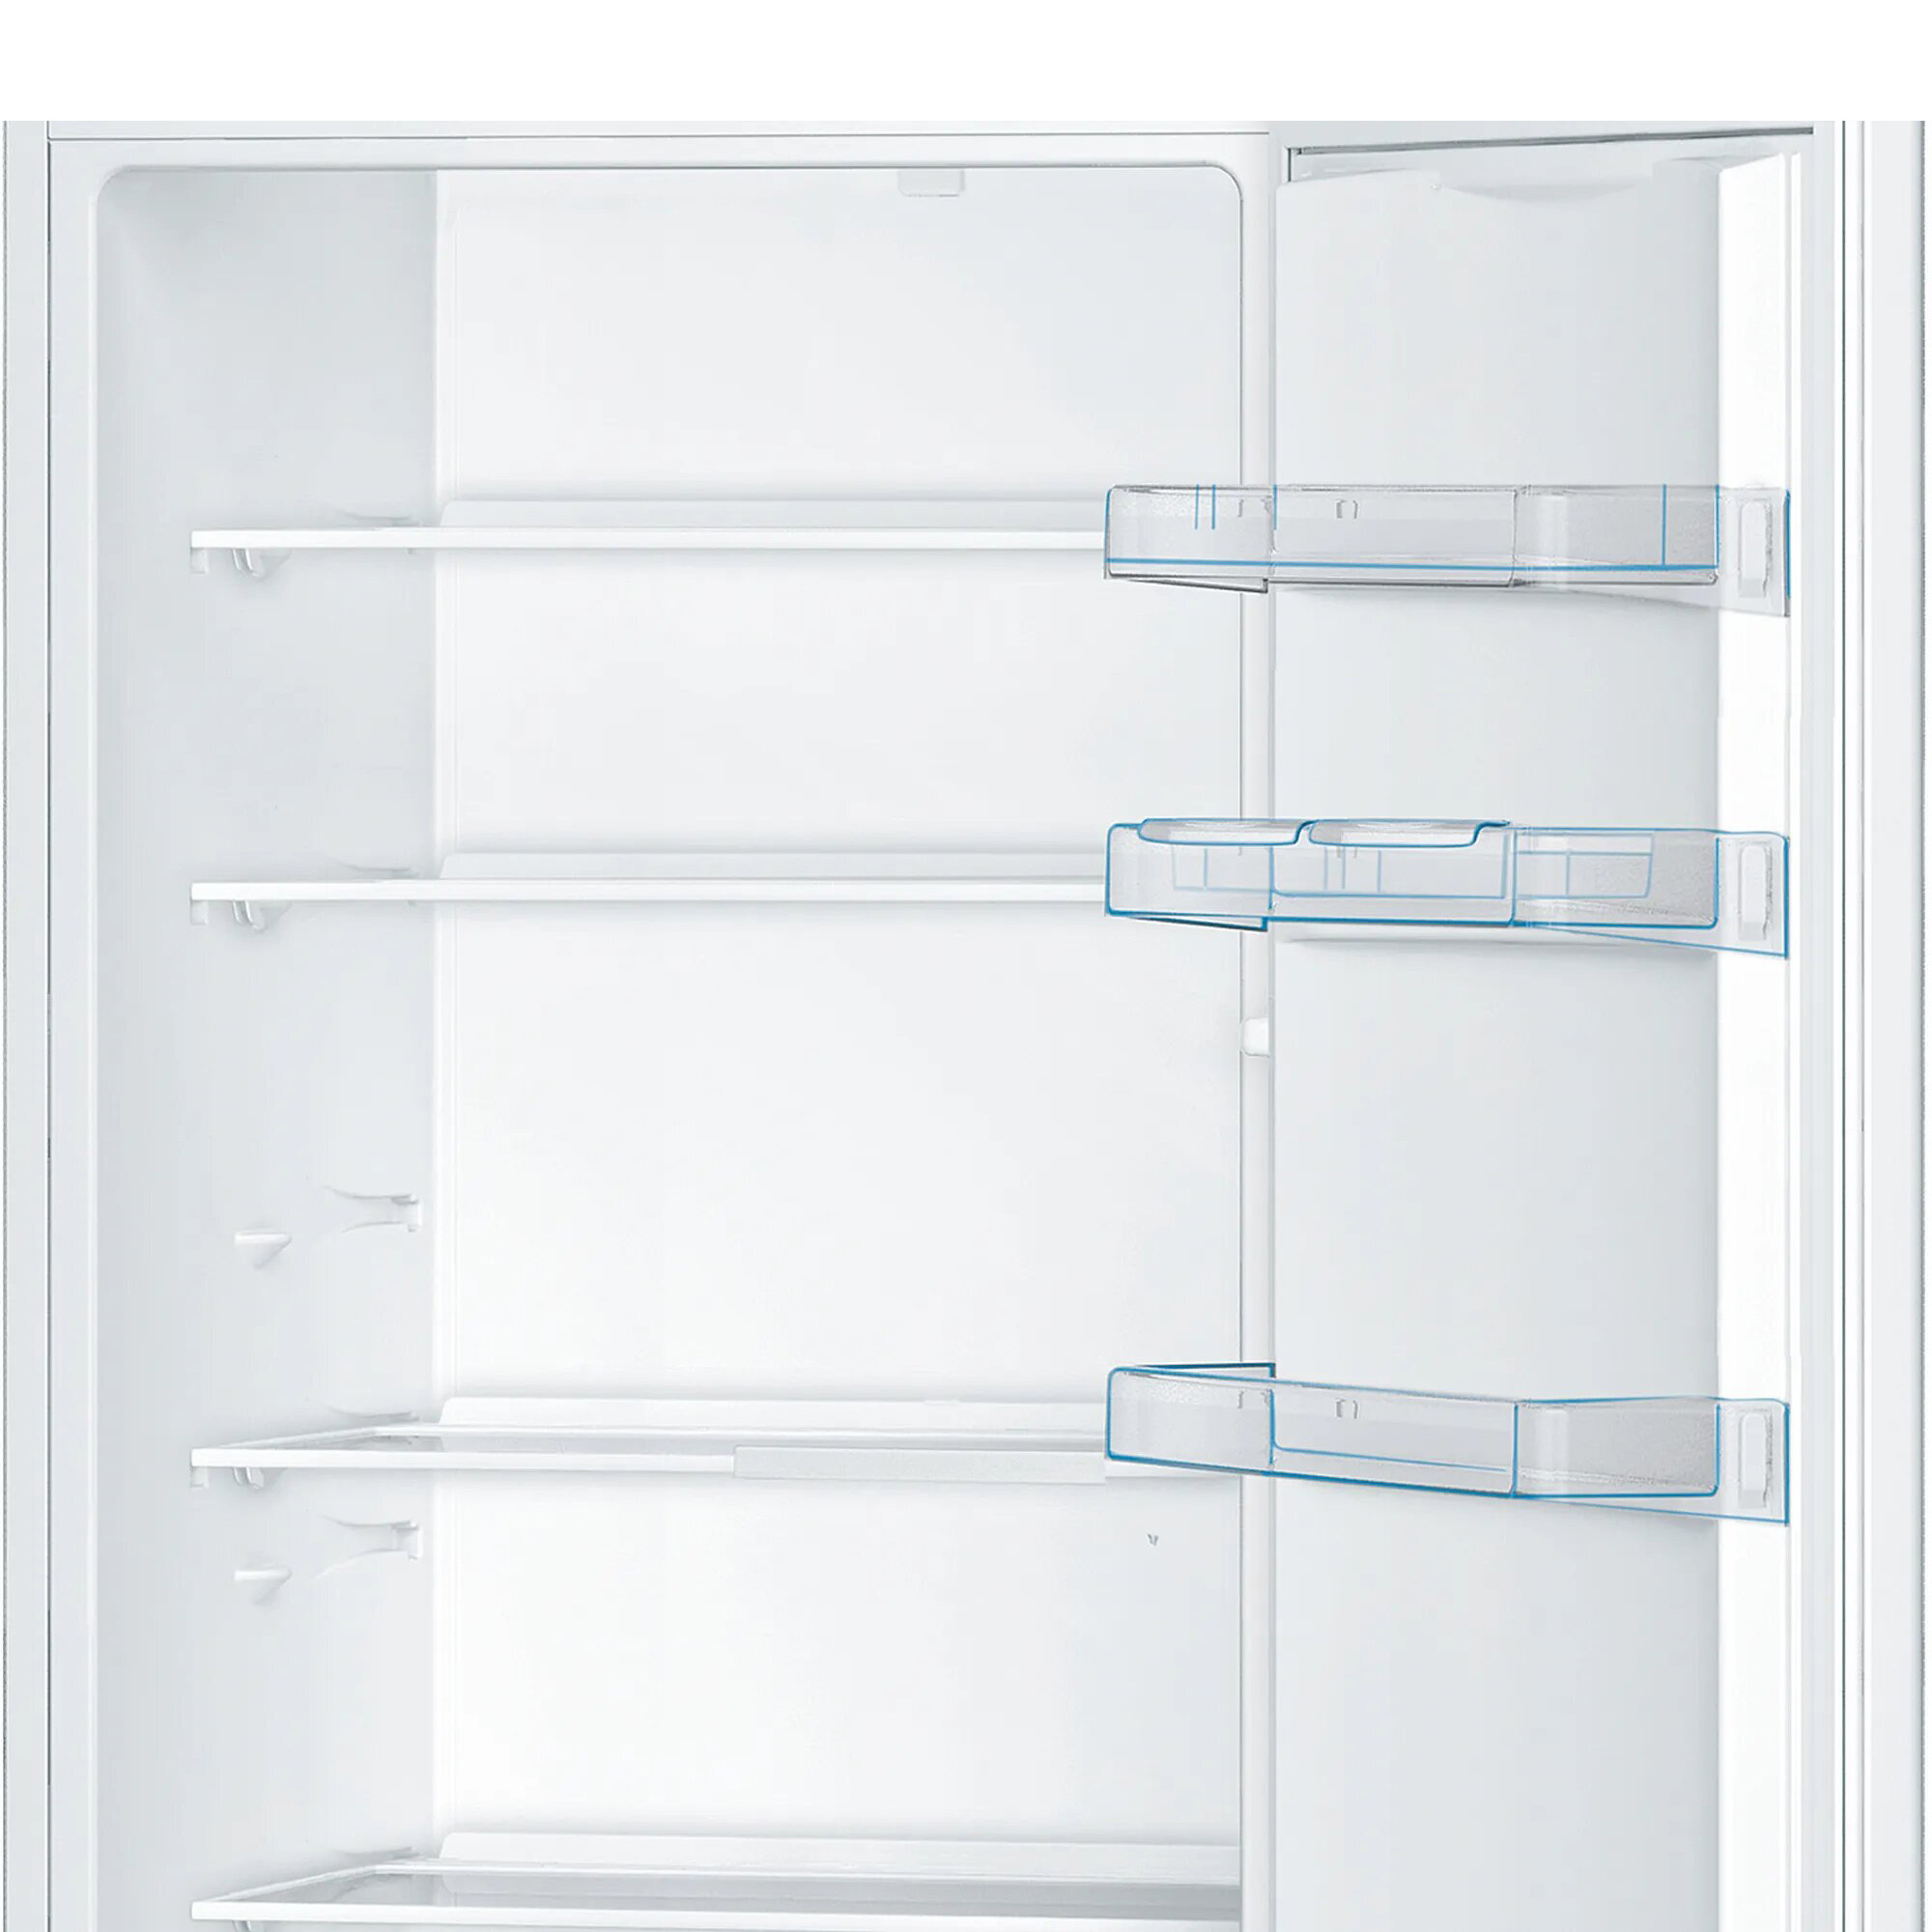 Холодильник Bosch KGV 36NW1AR